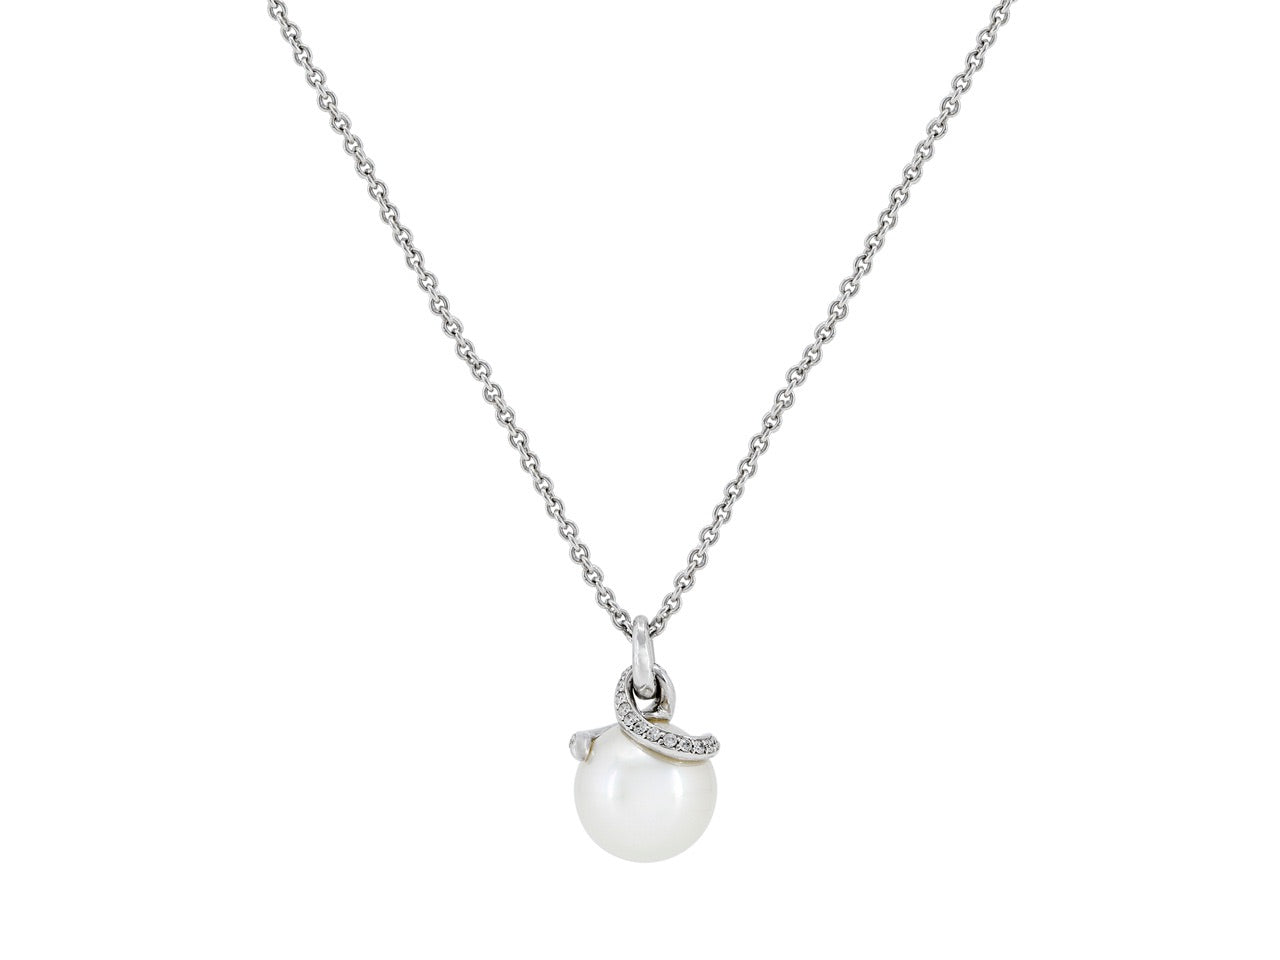 Mikimoto Pearl and Diamond Pendant in 18K White Gold